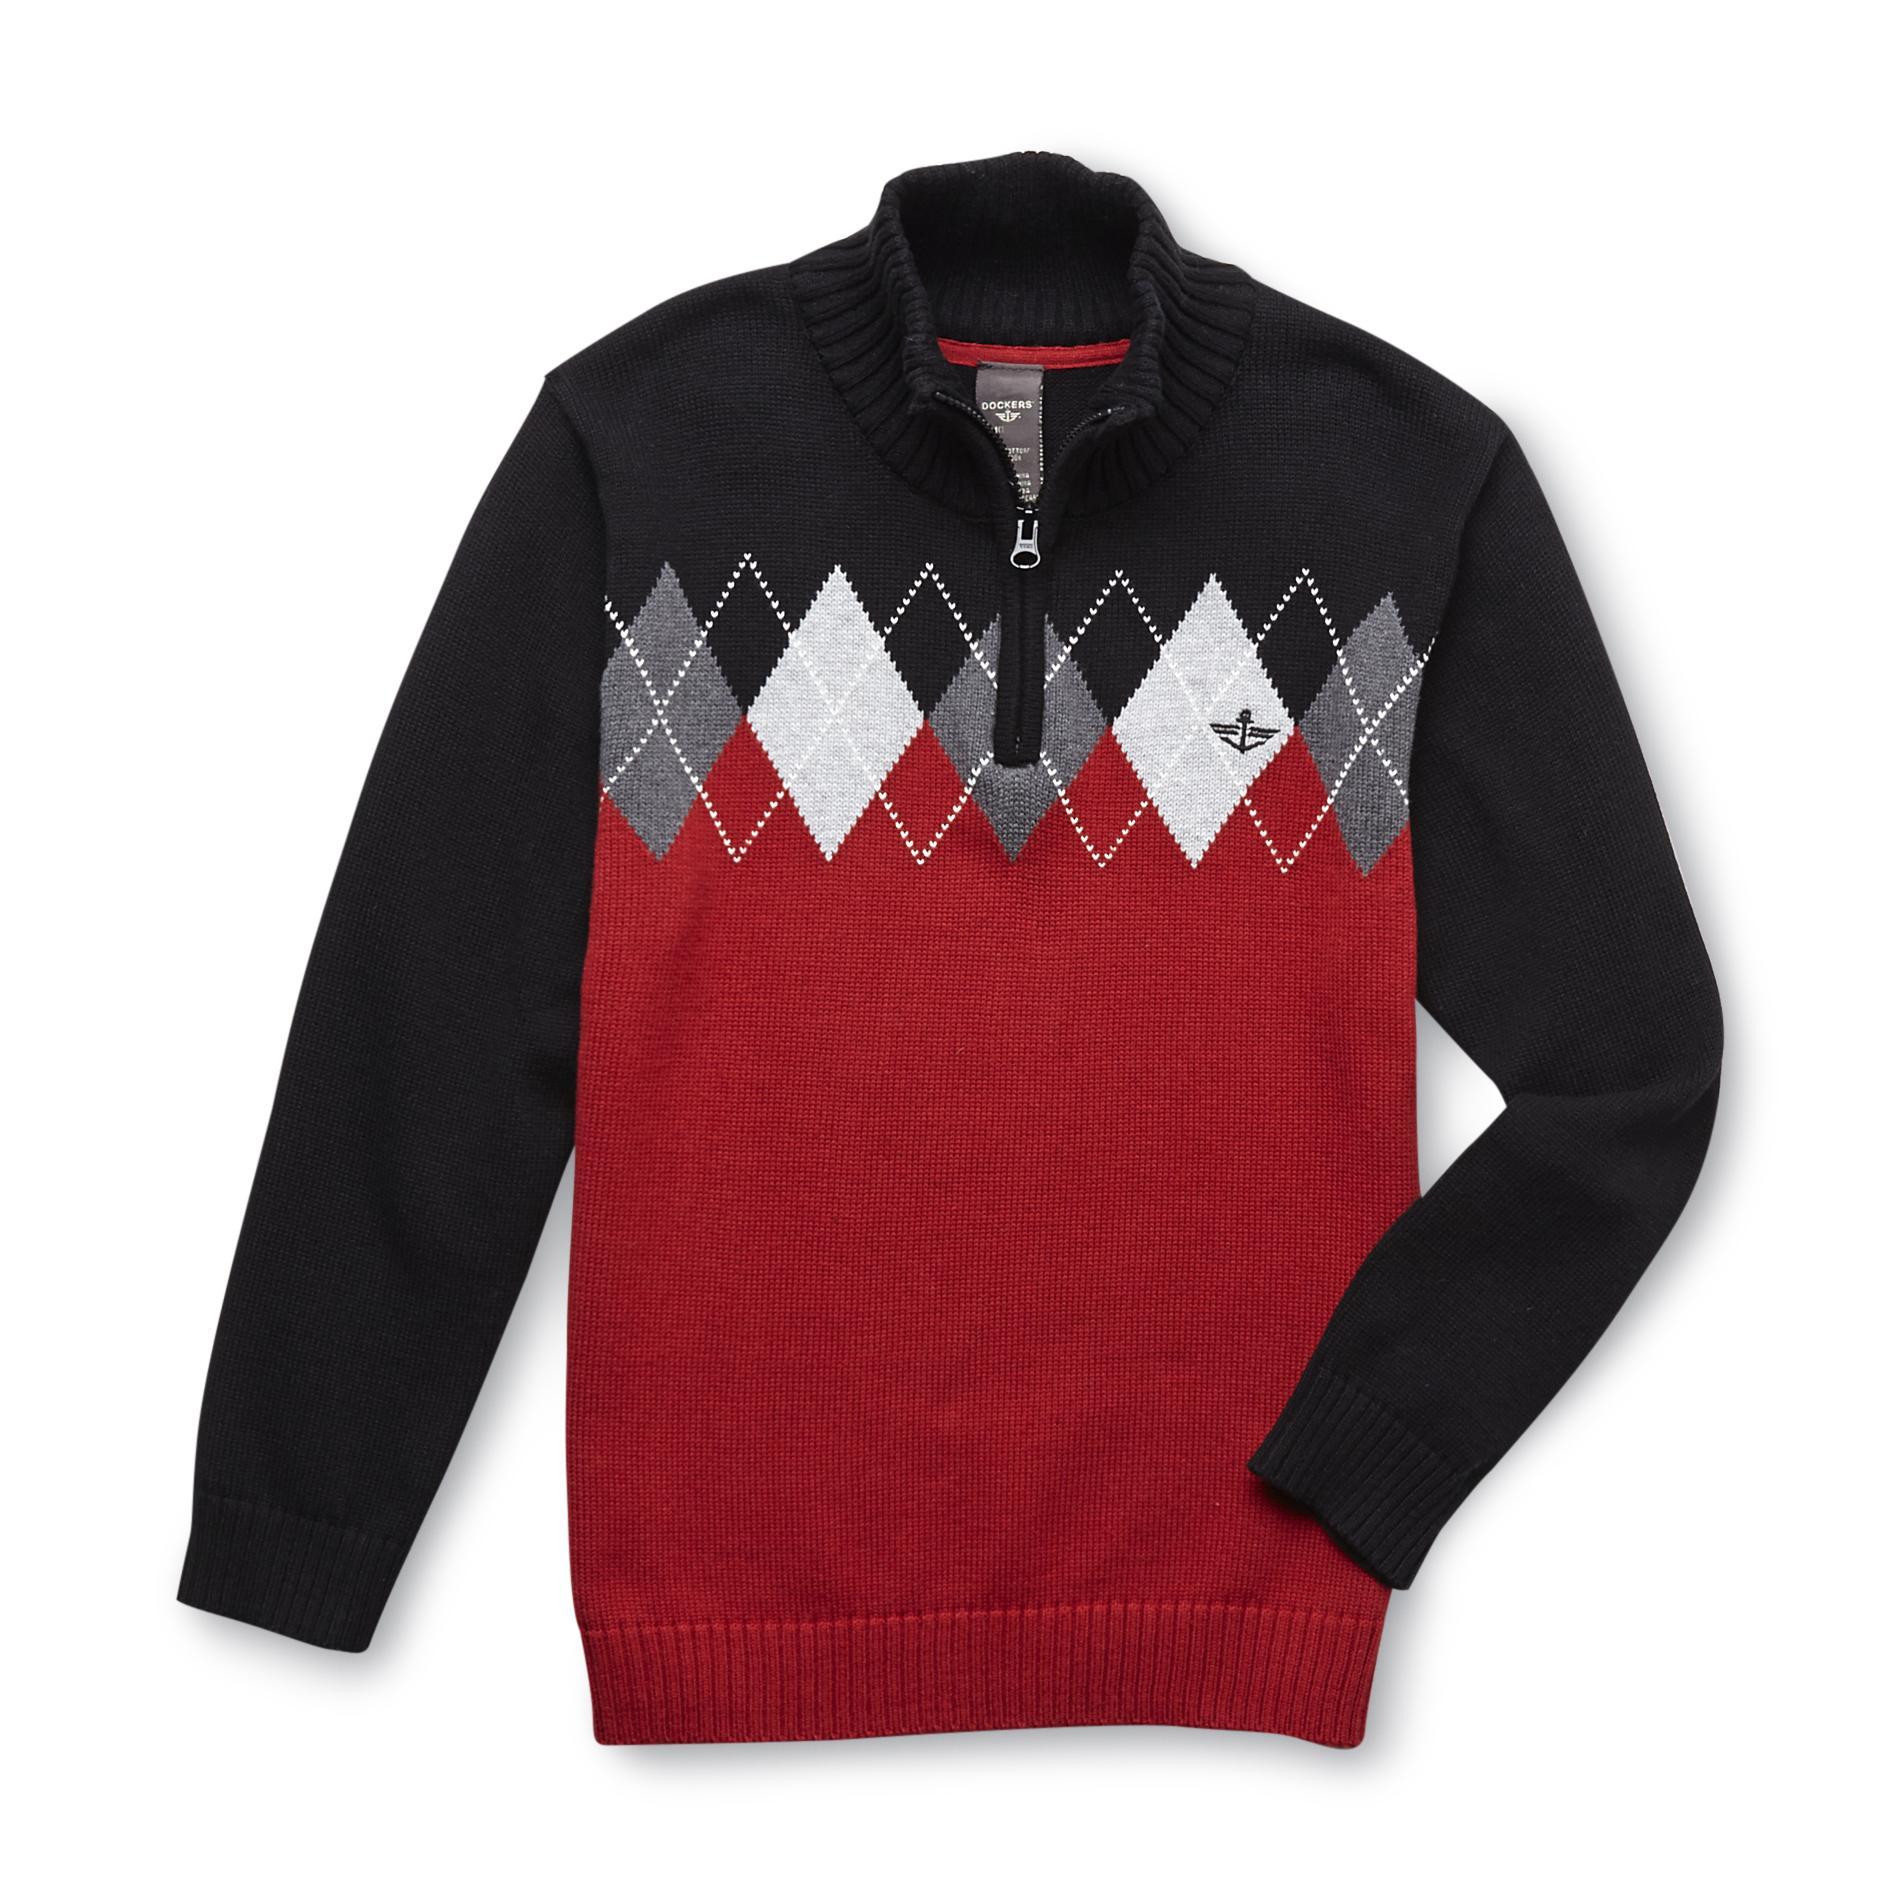 Dockers Boy's Quarter-Zip Sweater - Argyle